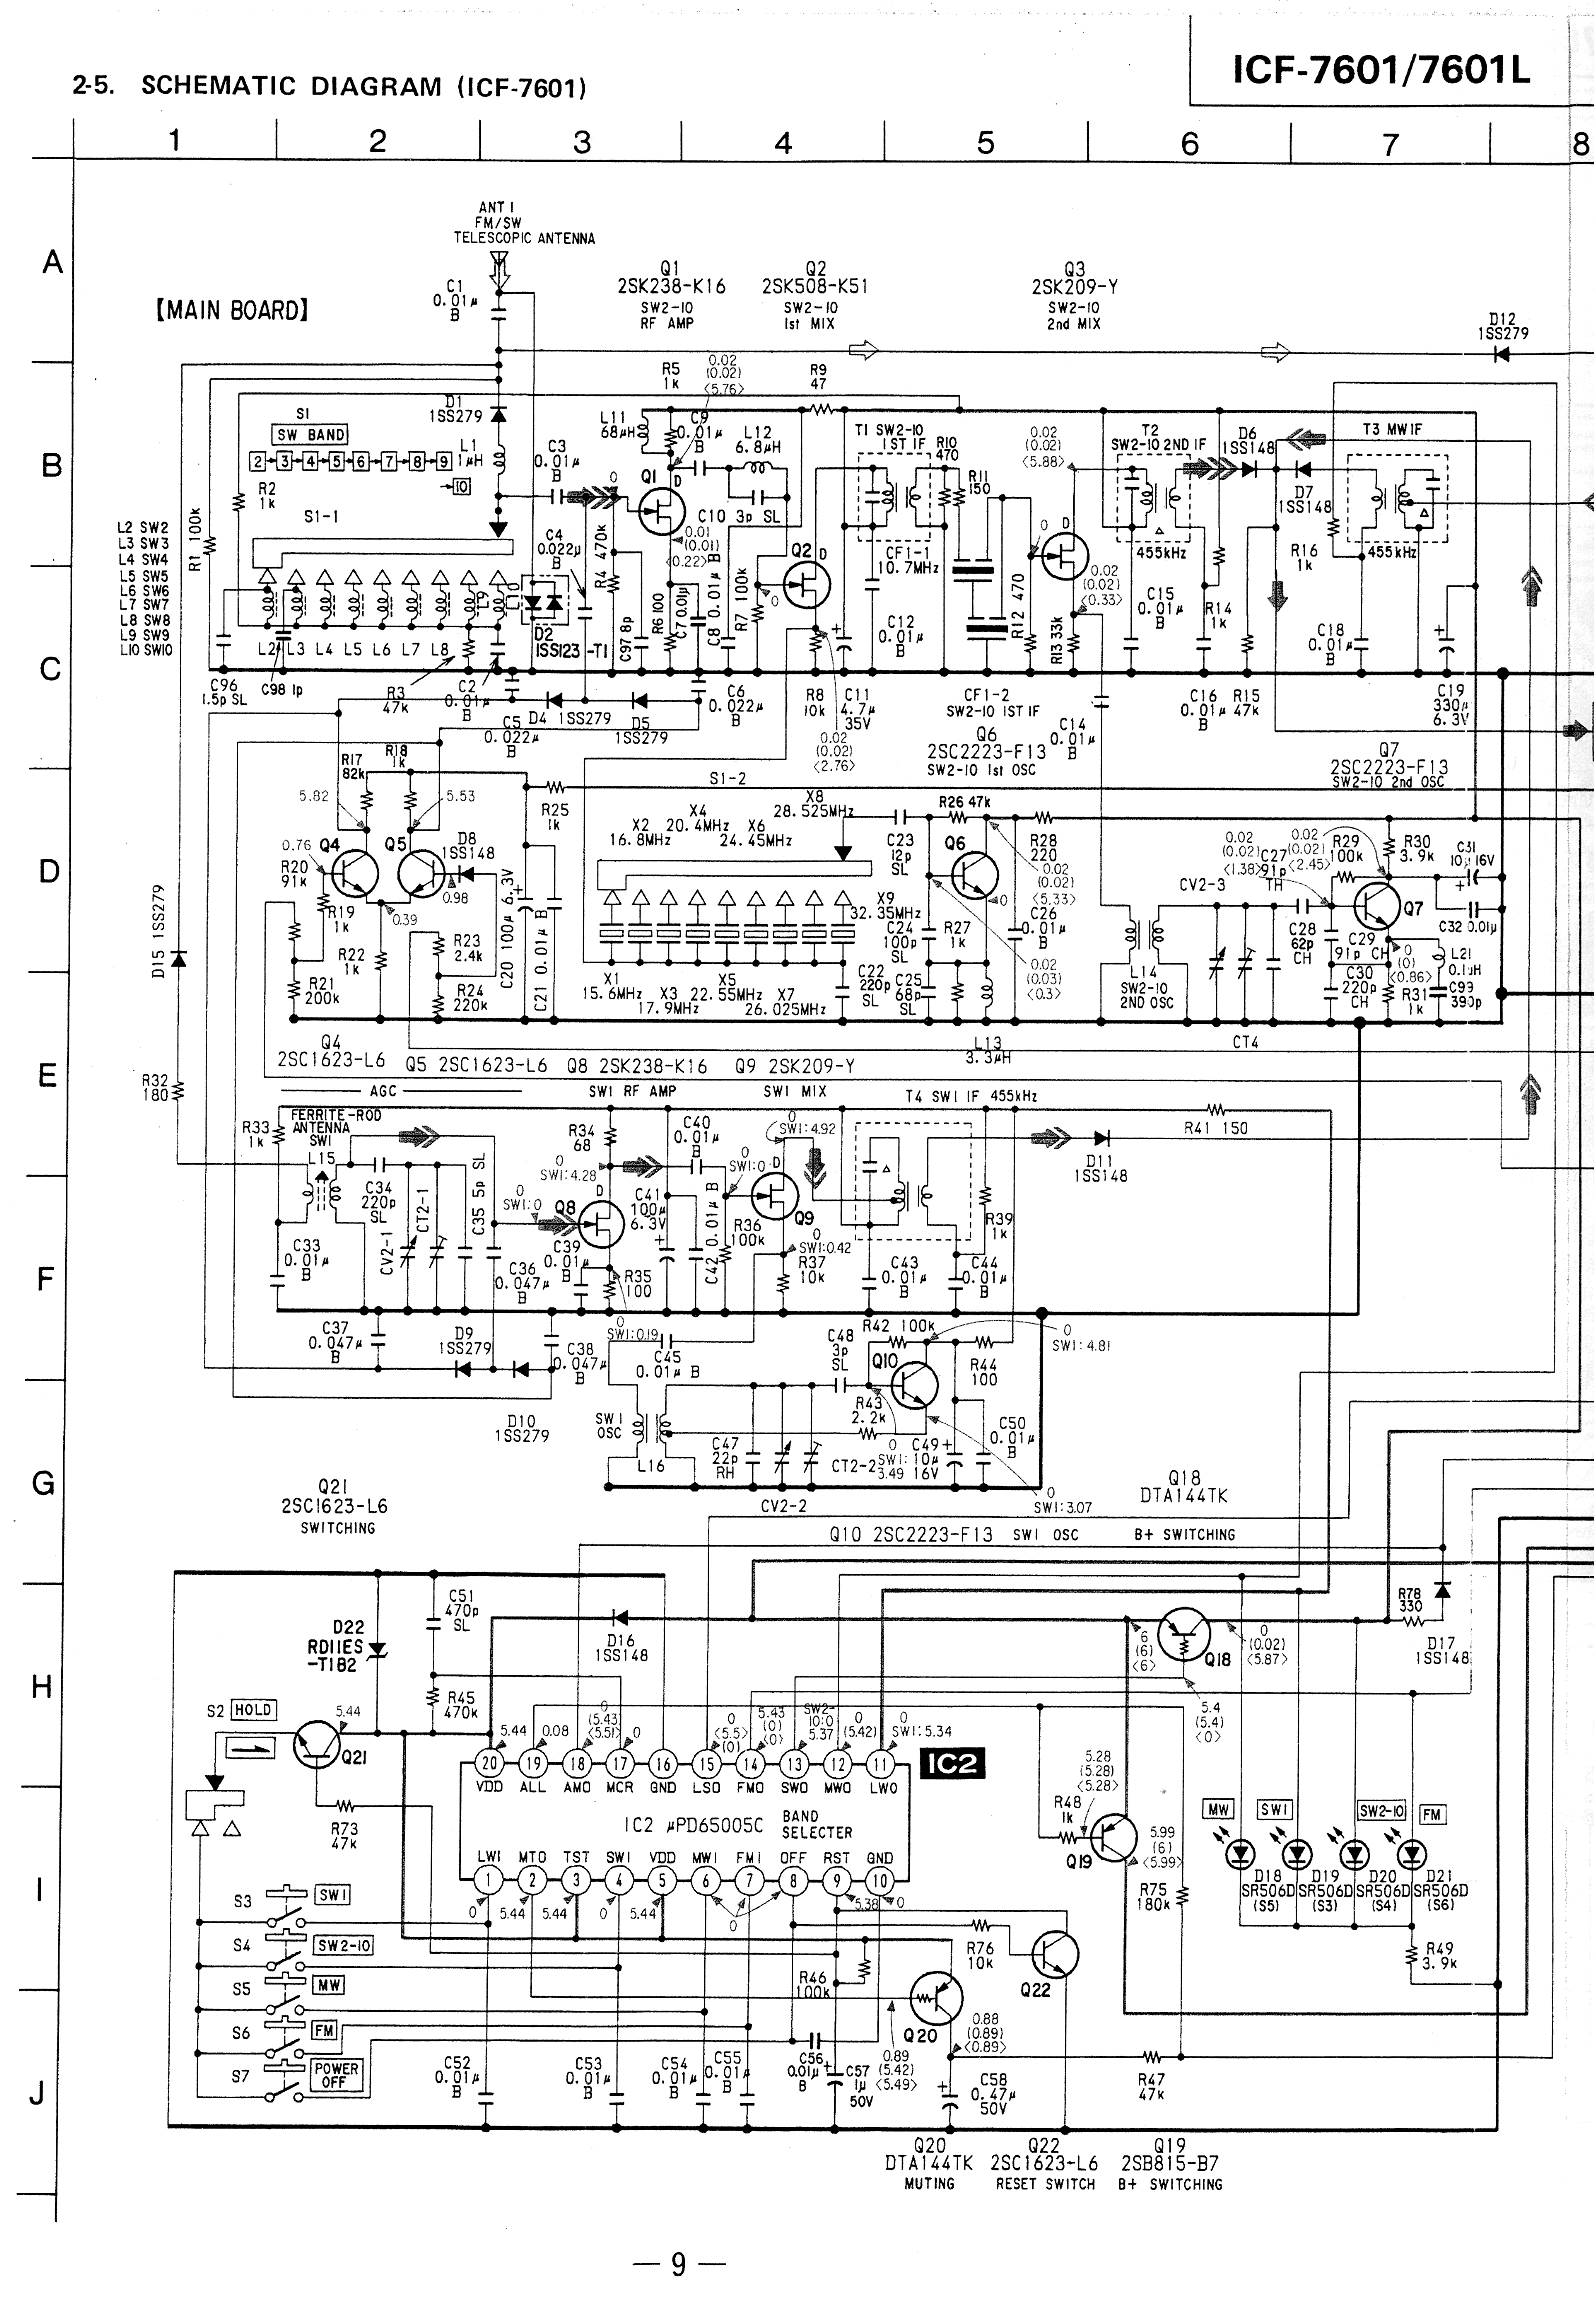 Sony ICF-7601 Schematic for ICF-7601, left part